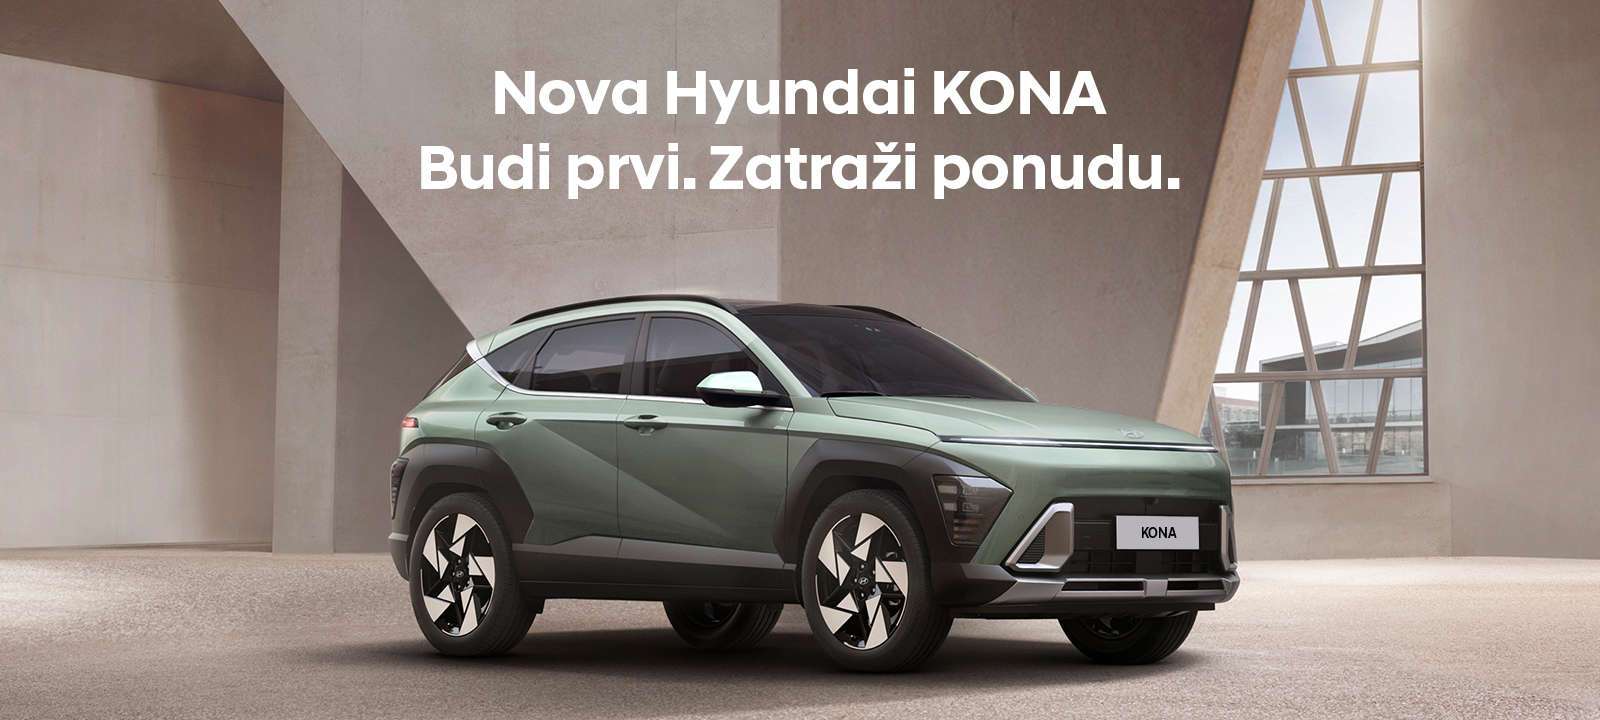 Nova Hyundai Kona